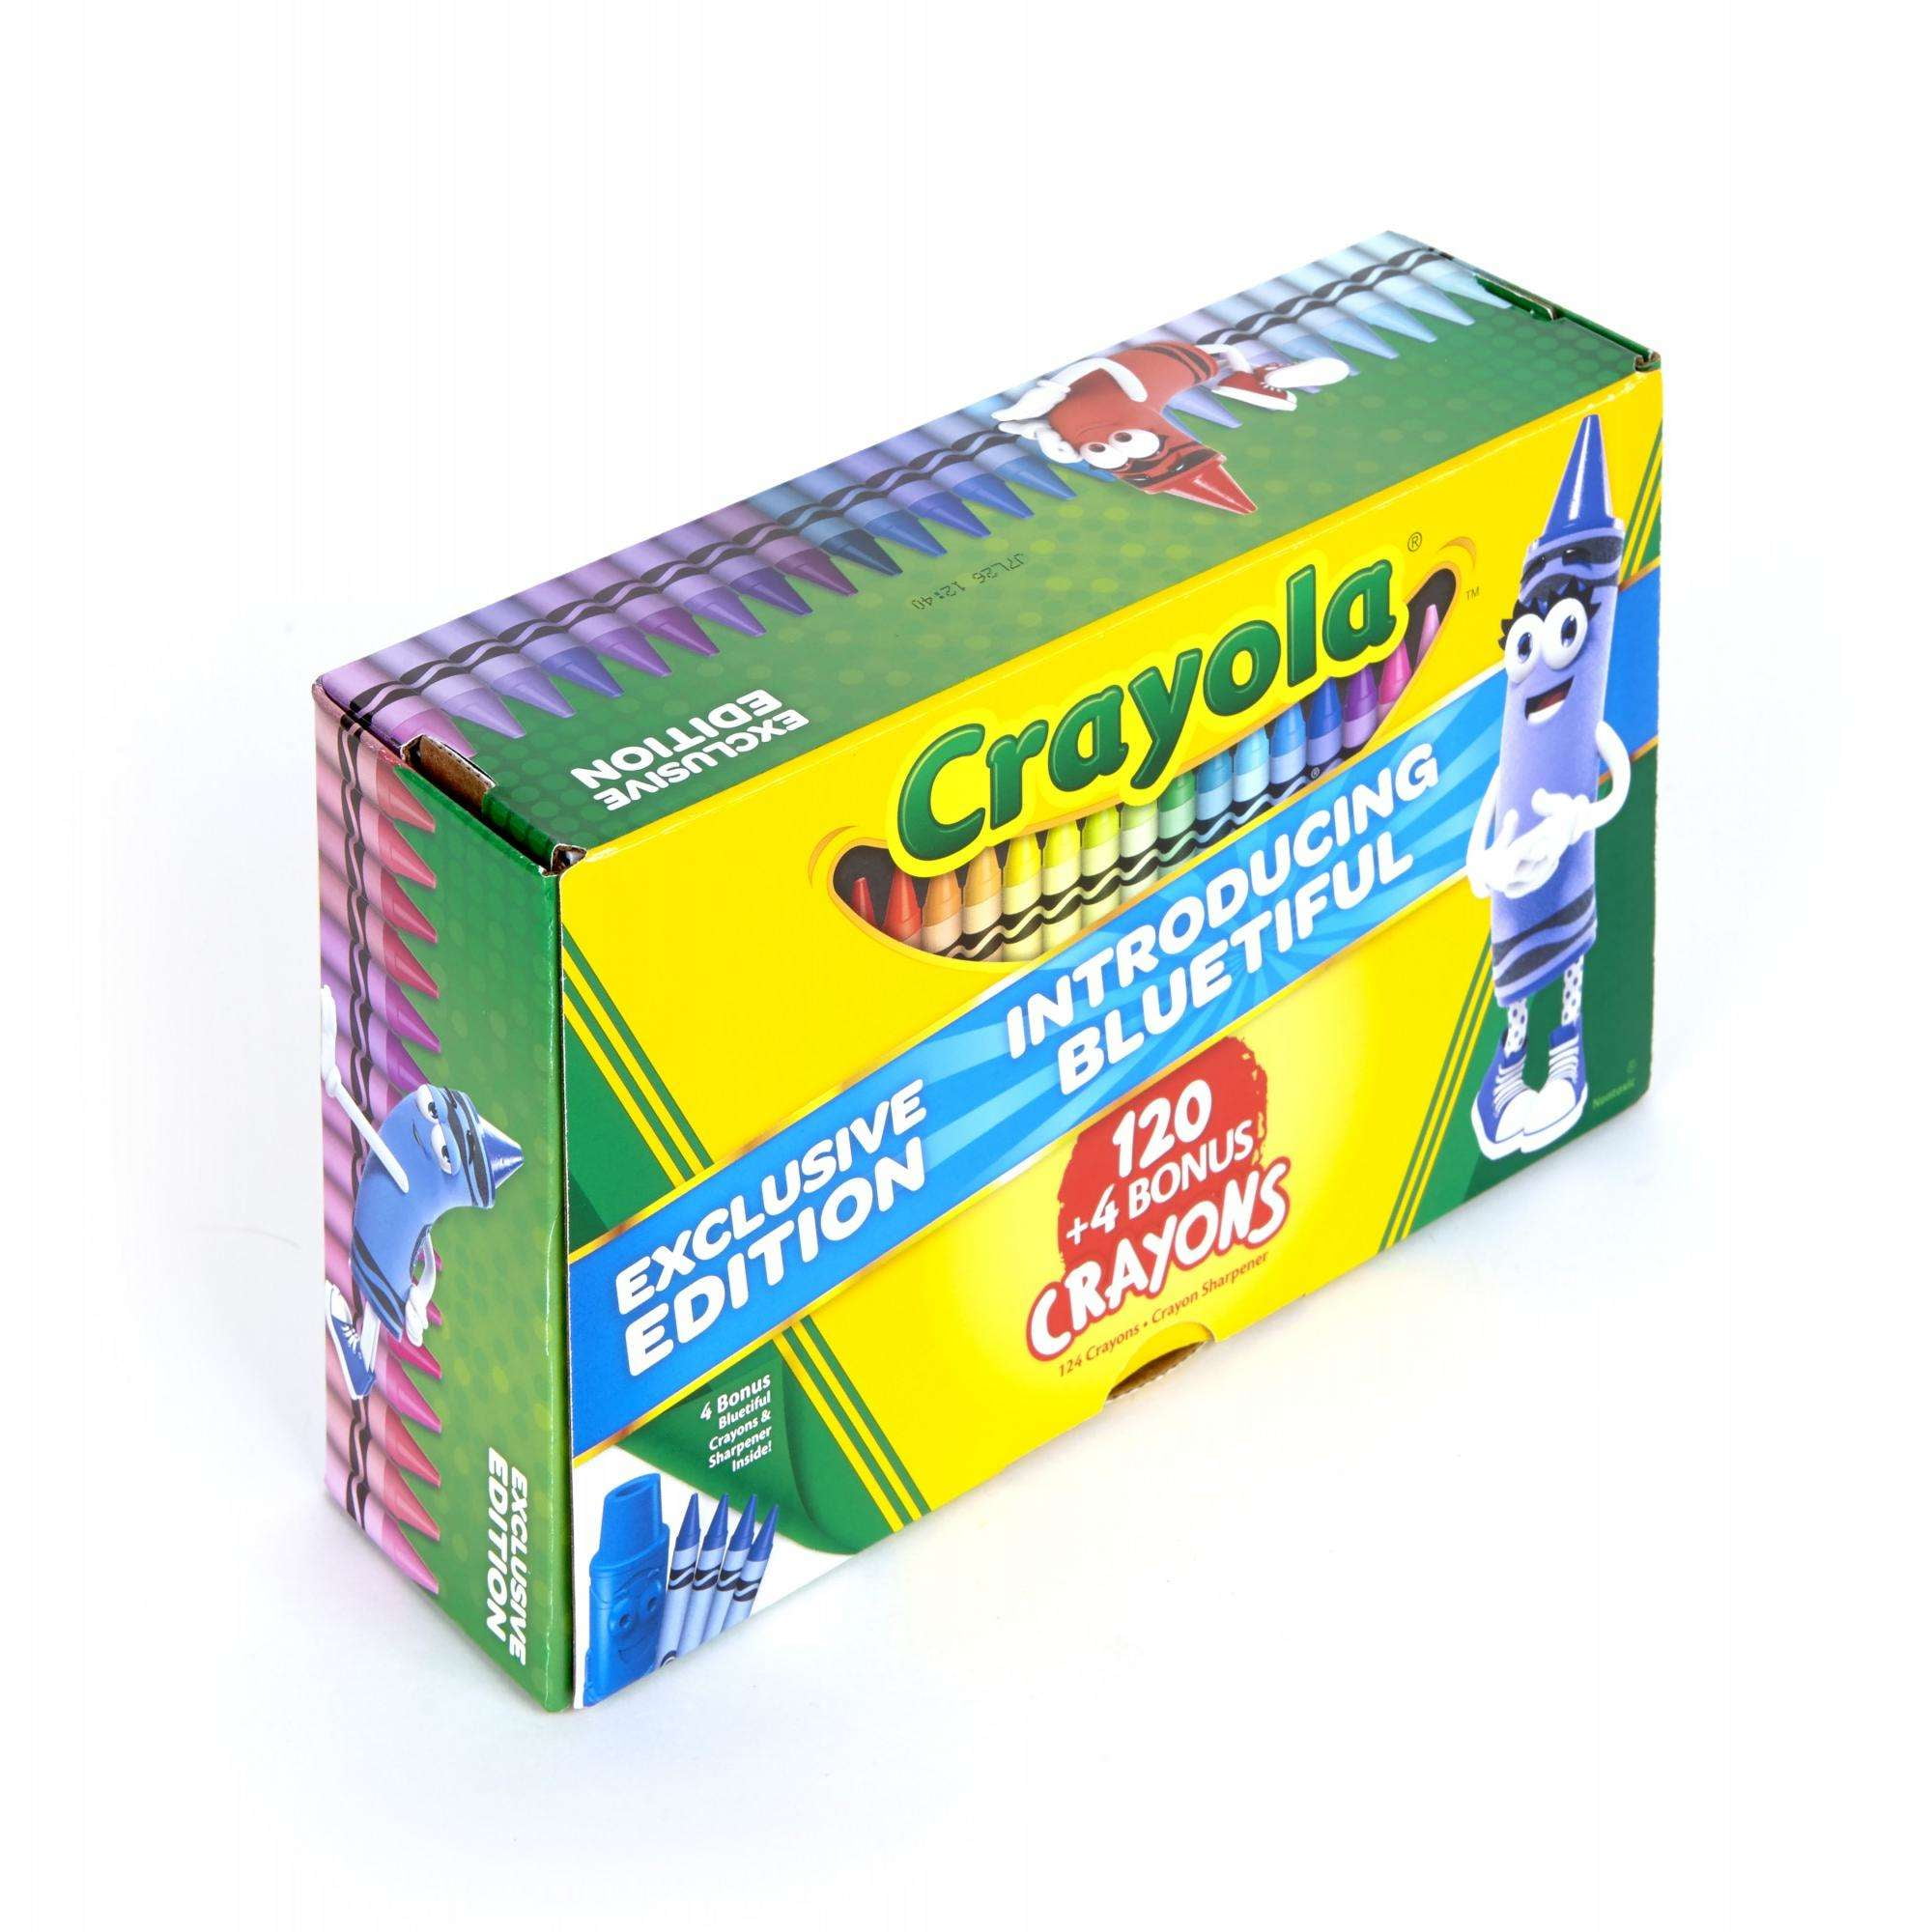 CrayolaNew Bluetiful Crayola Crayon Box, Walmart Exclusive, Gift For Kids,  124 Count 